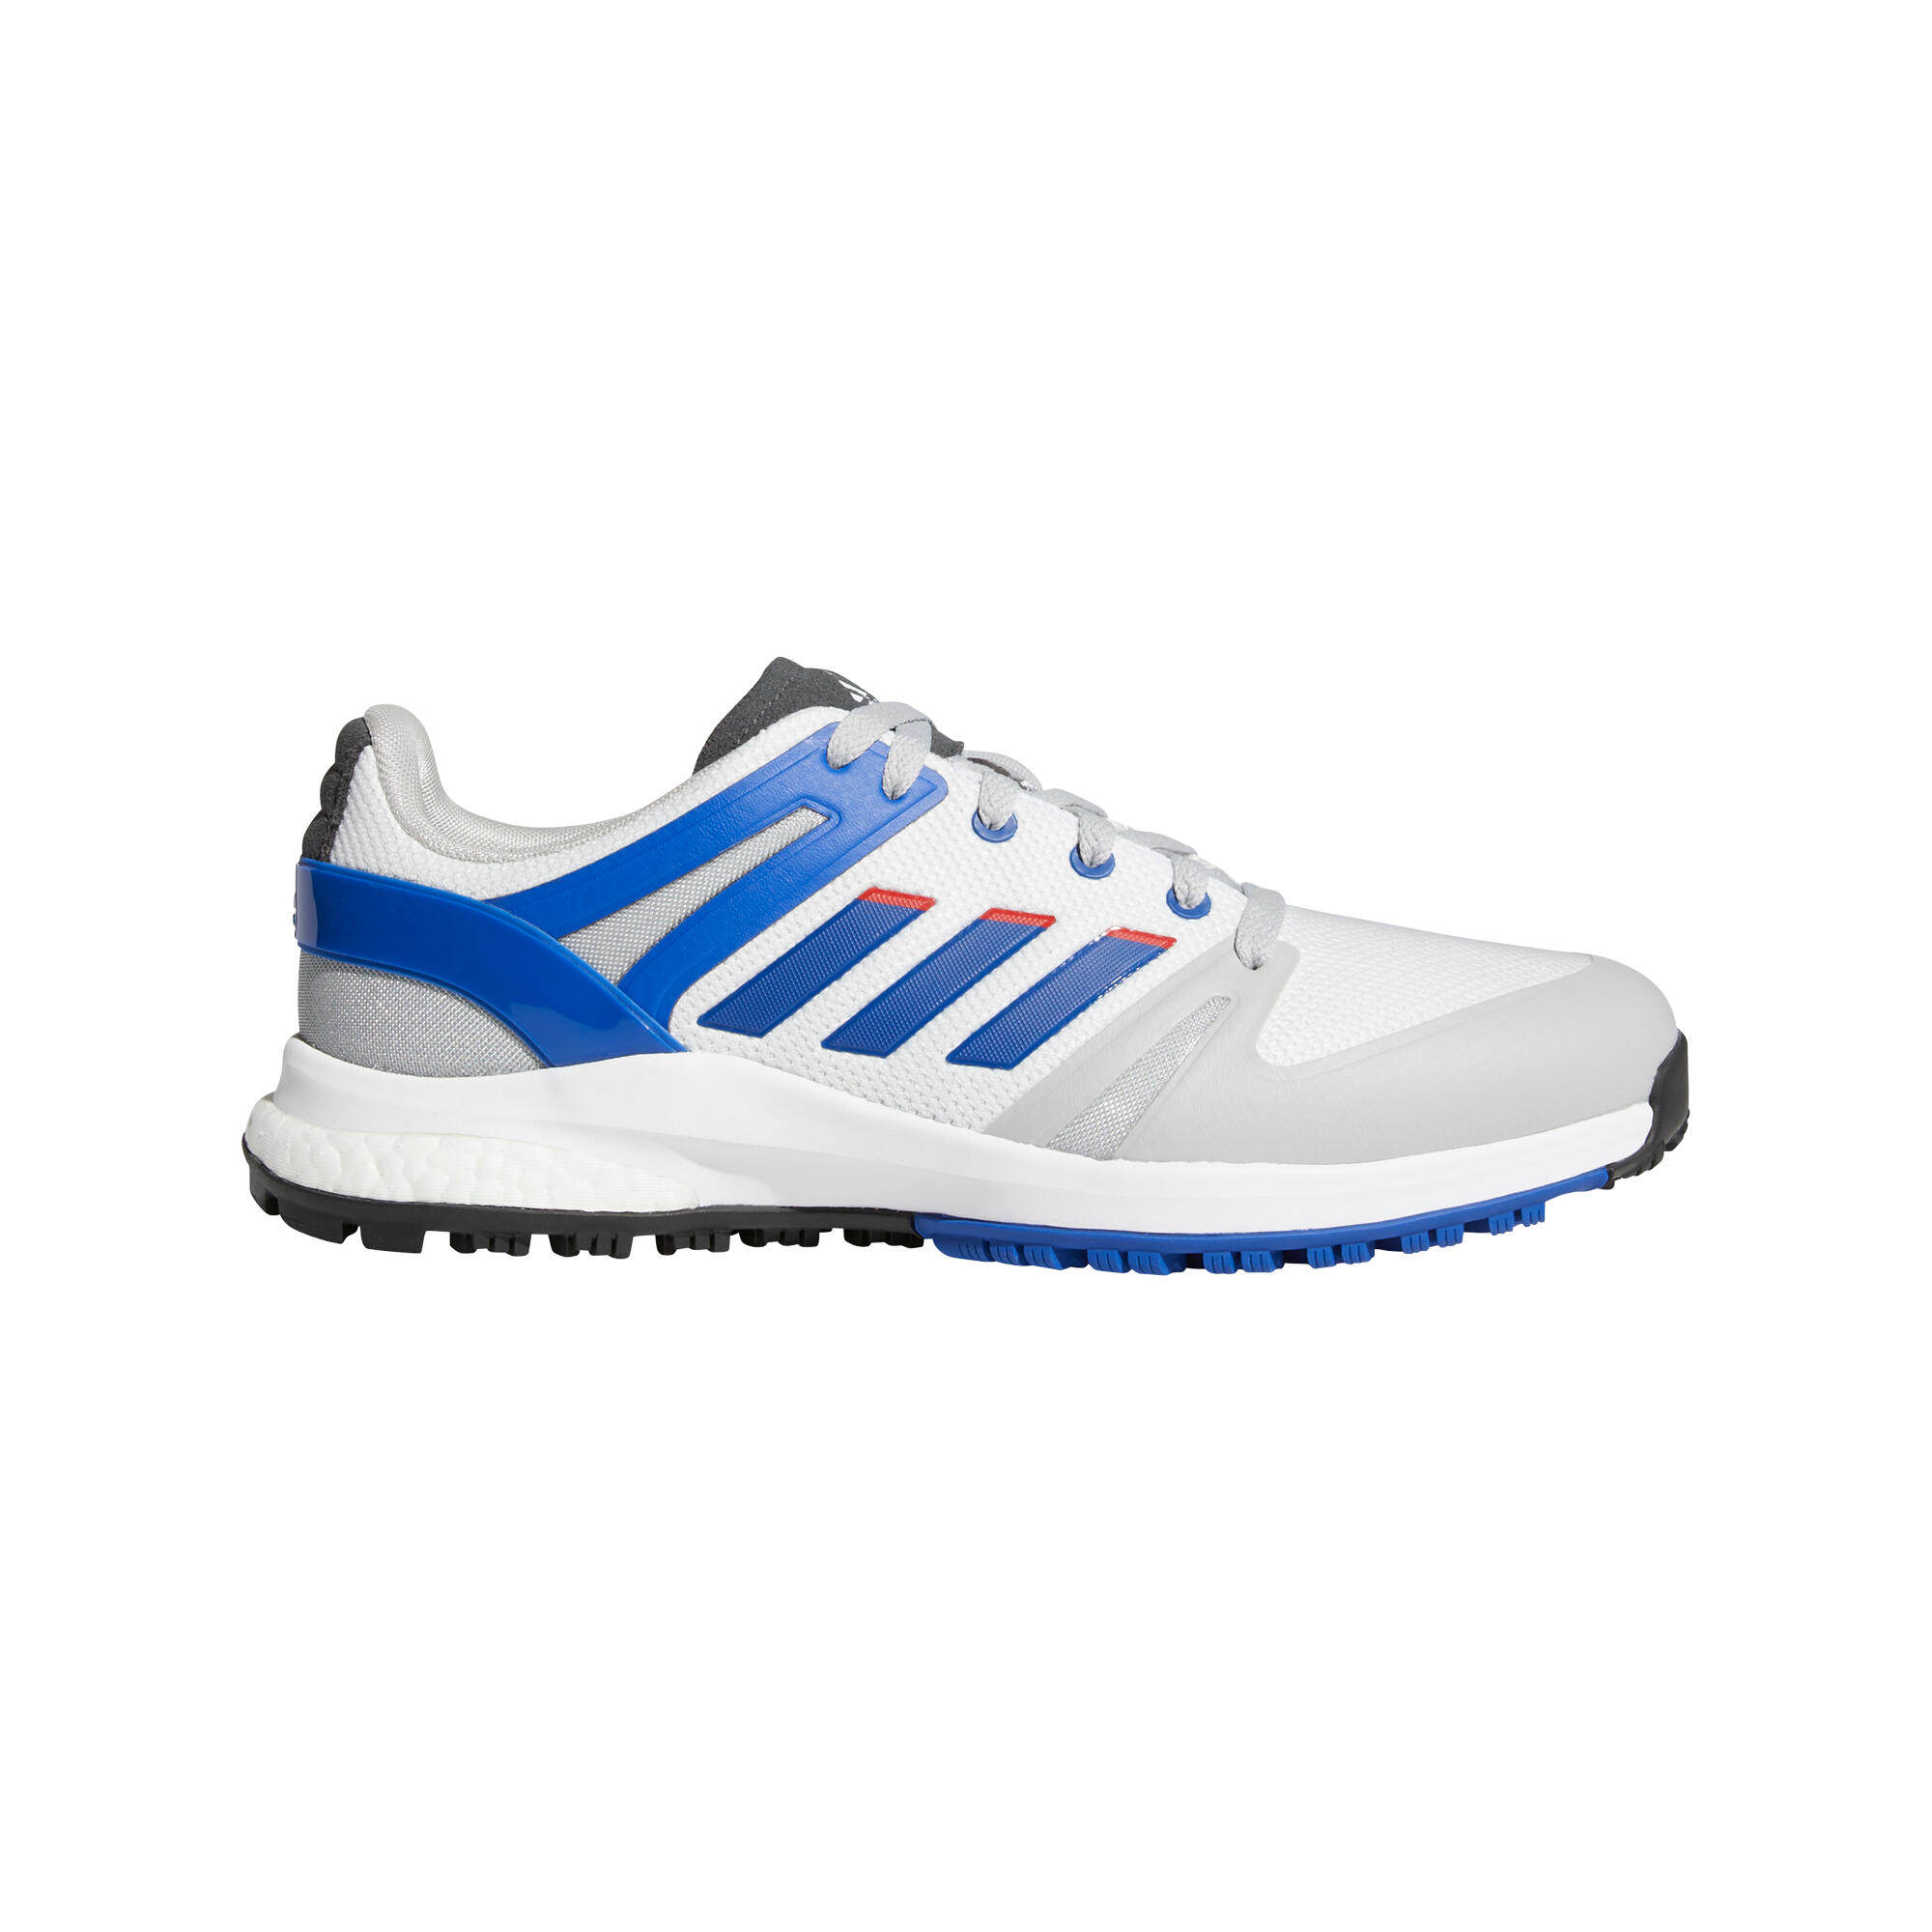 adidas EQT SL Golf Shoes - White/Blue/Grey2 1/5